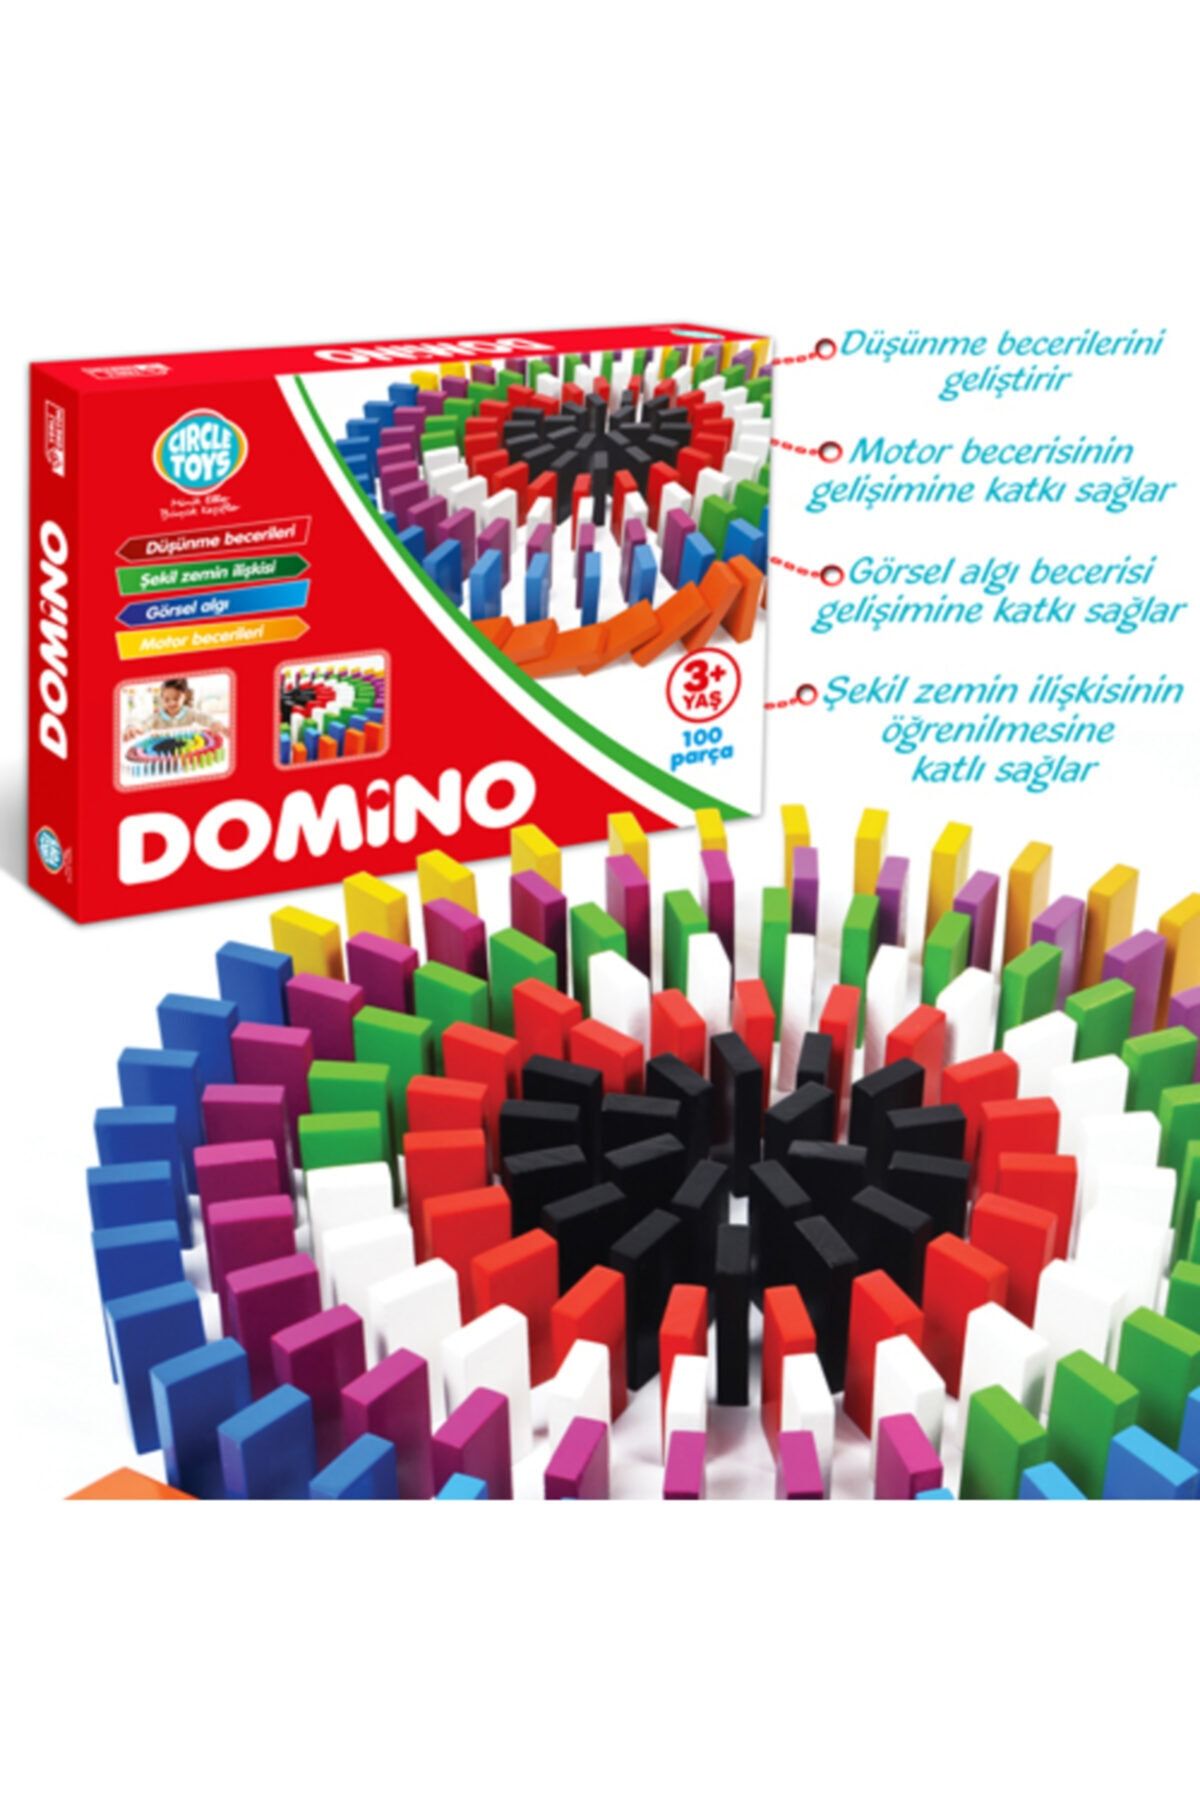 Circle Toys Domino Oyunu